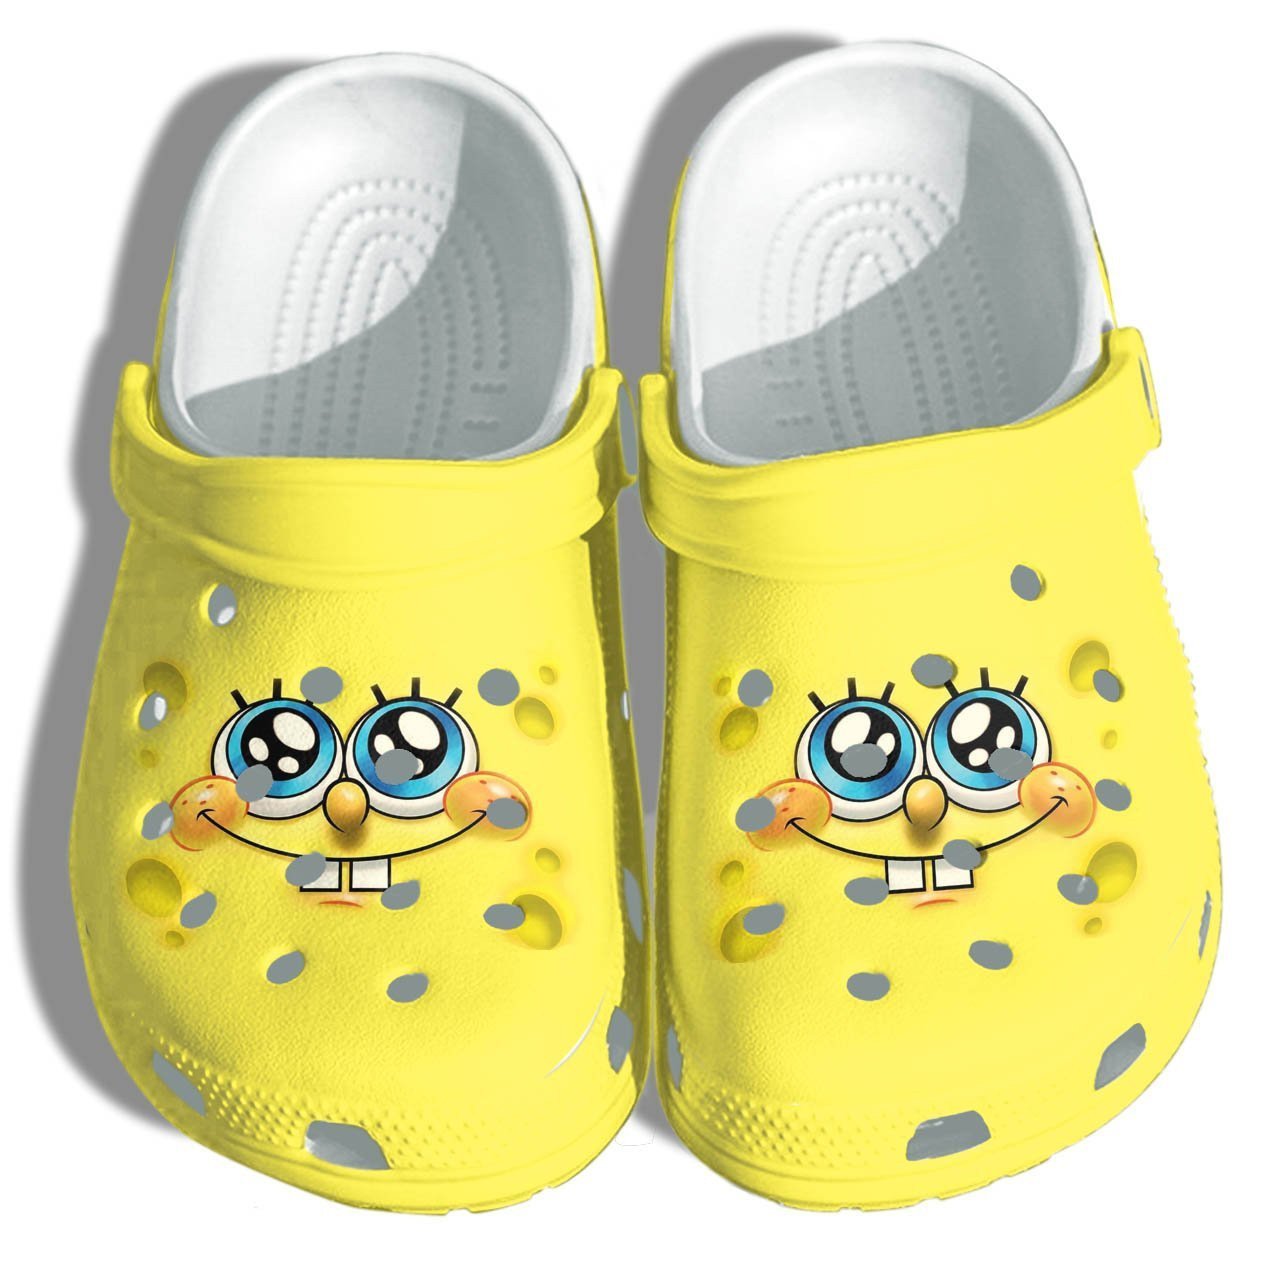 Sponge Cute Crocss Crocss Crocband Clog Comfortable Water Shoes